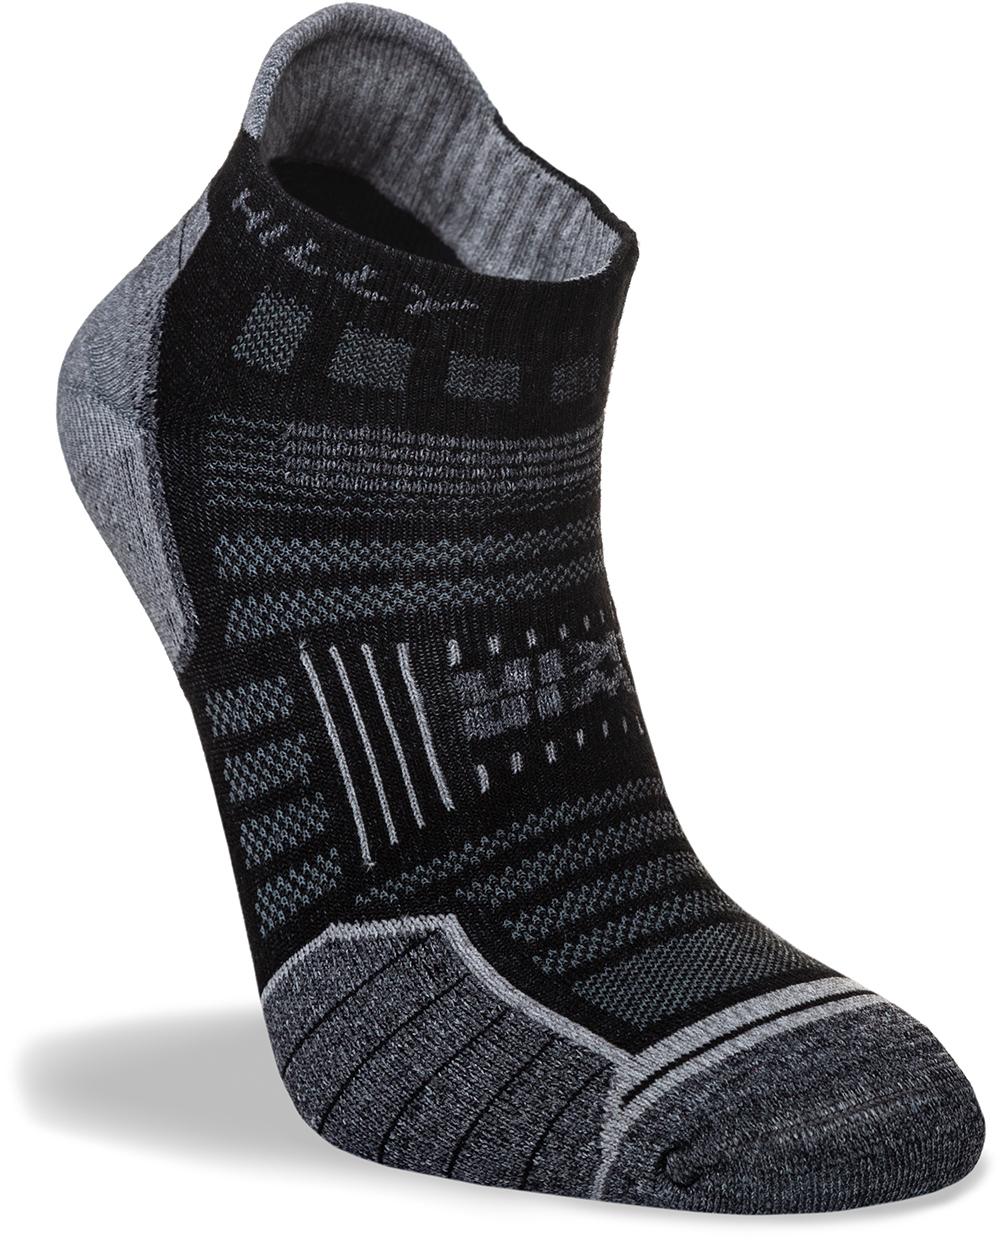 Hilly Twin Skin Socklet - Black/grey Marl